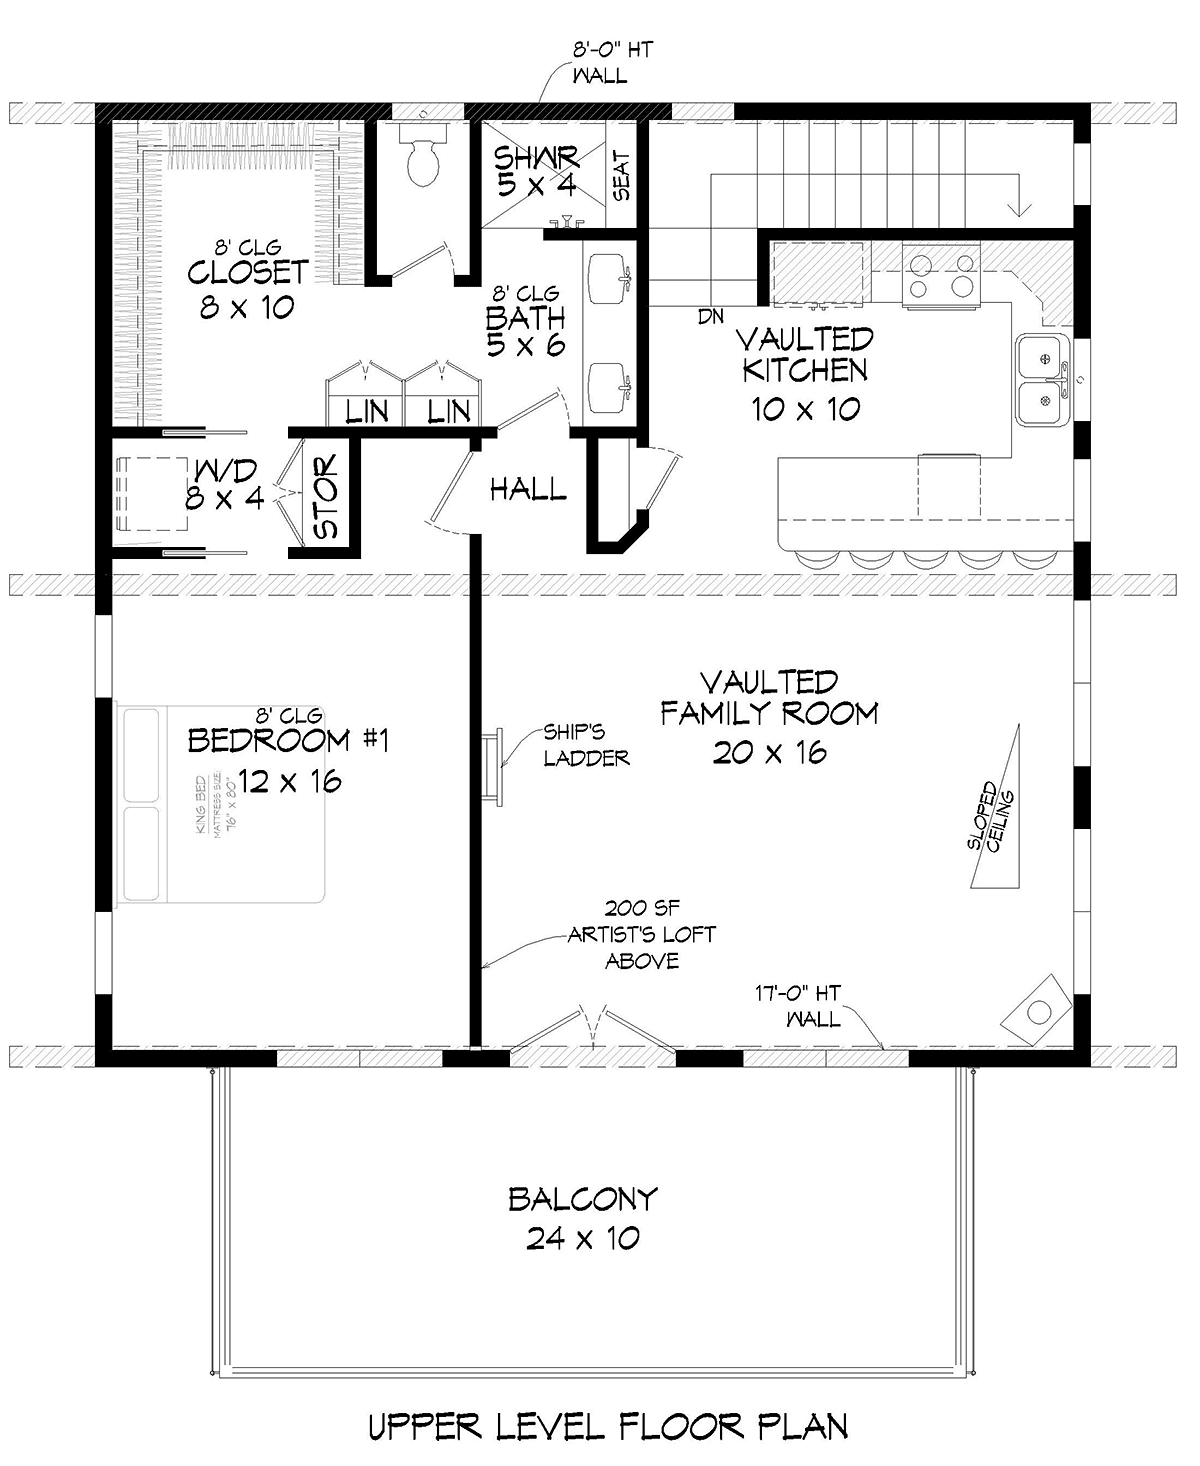 Coastal, Contemporary, Modern Garage-Living Plan 40863 with 2 Beds, 2 Baths, 2 Car Garage Level Two